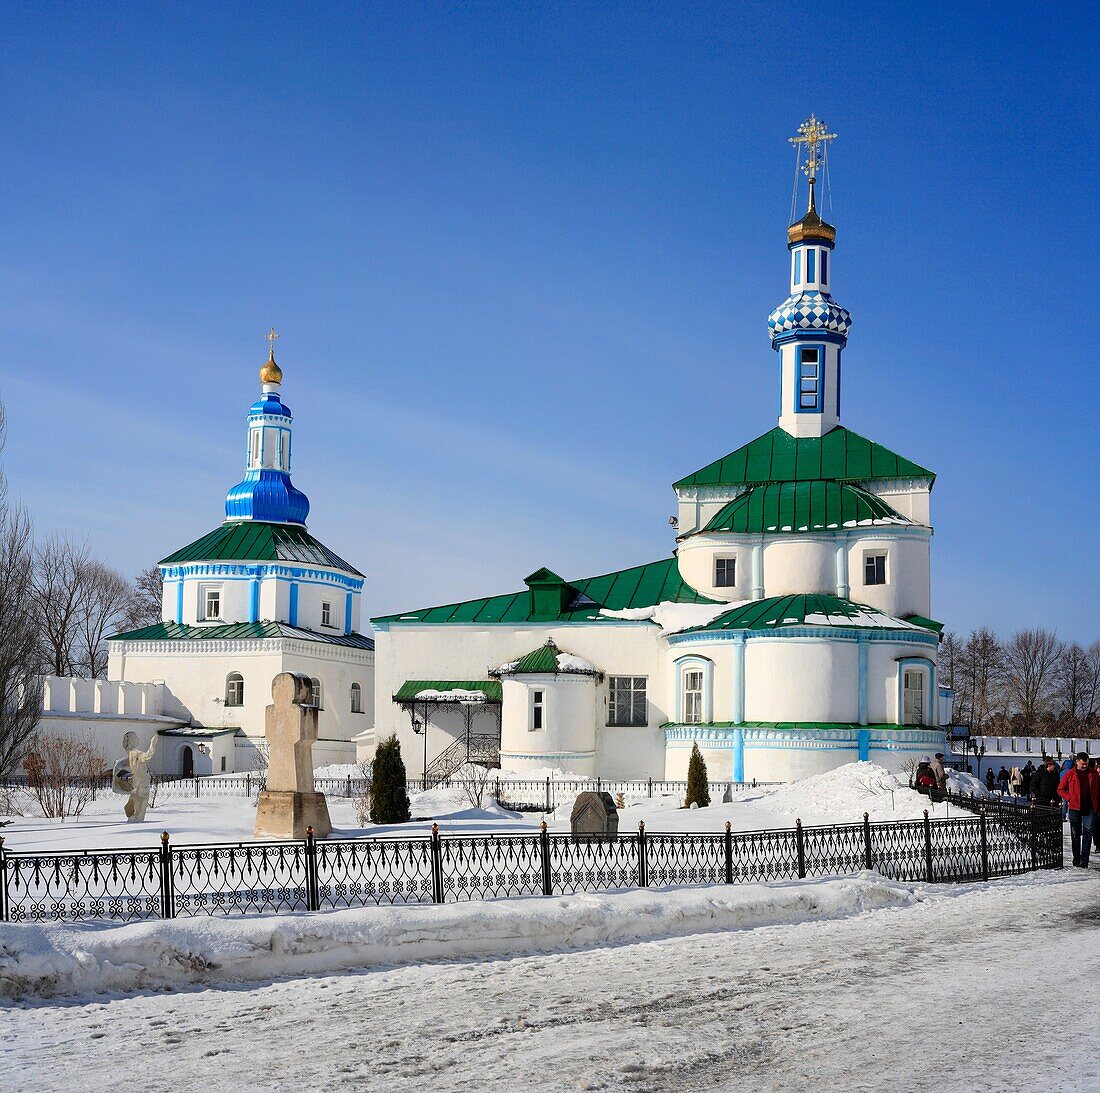 Raifa Orthodox monastery 19 cent, near Kazan, Tatarstan, Russia